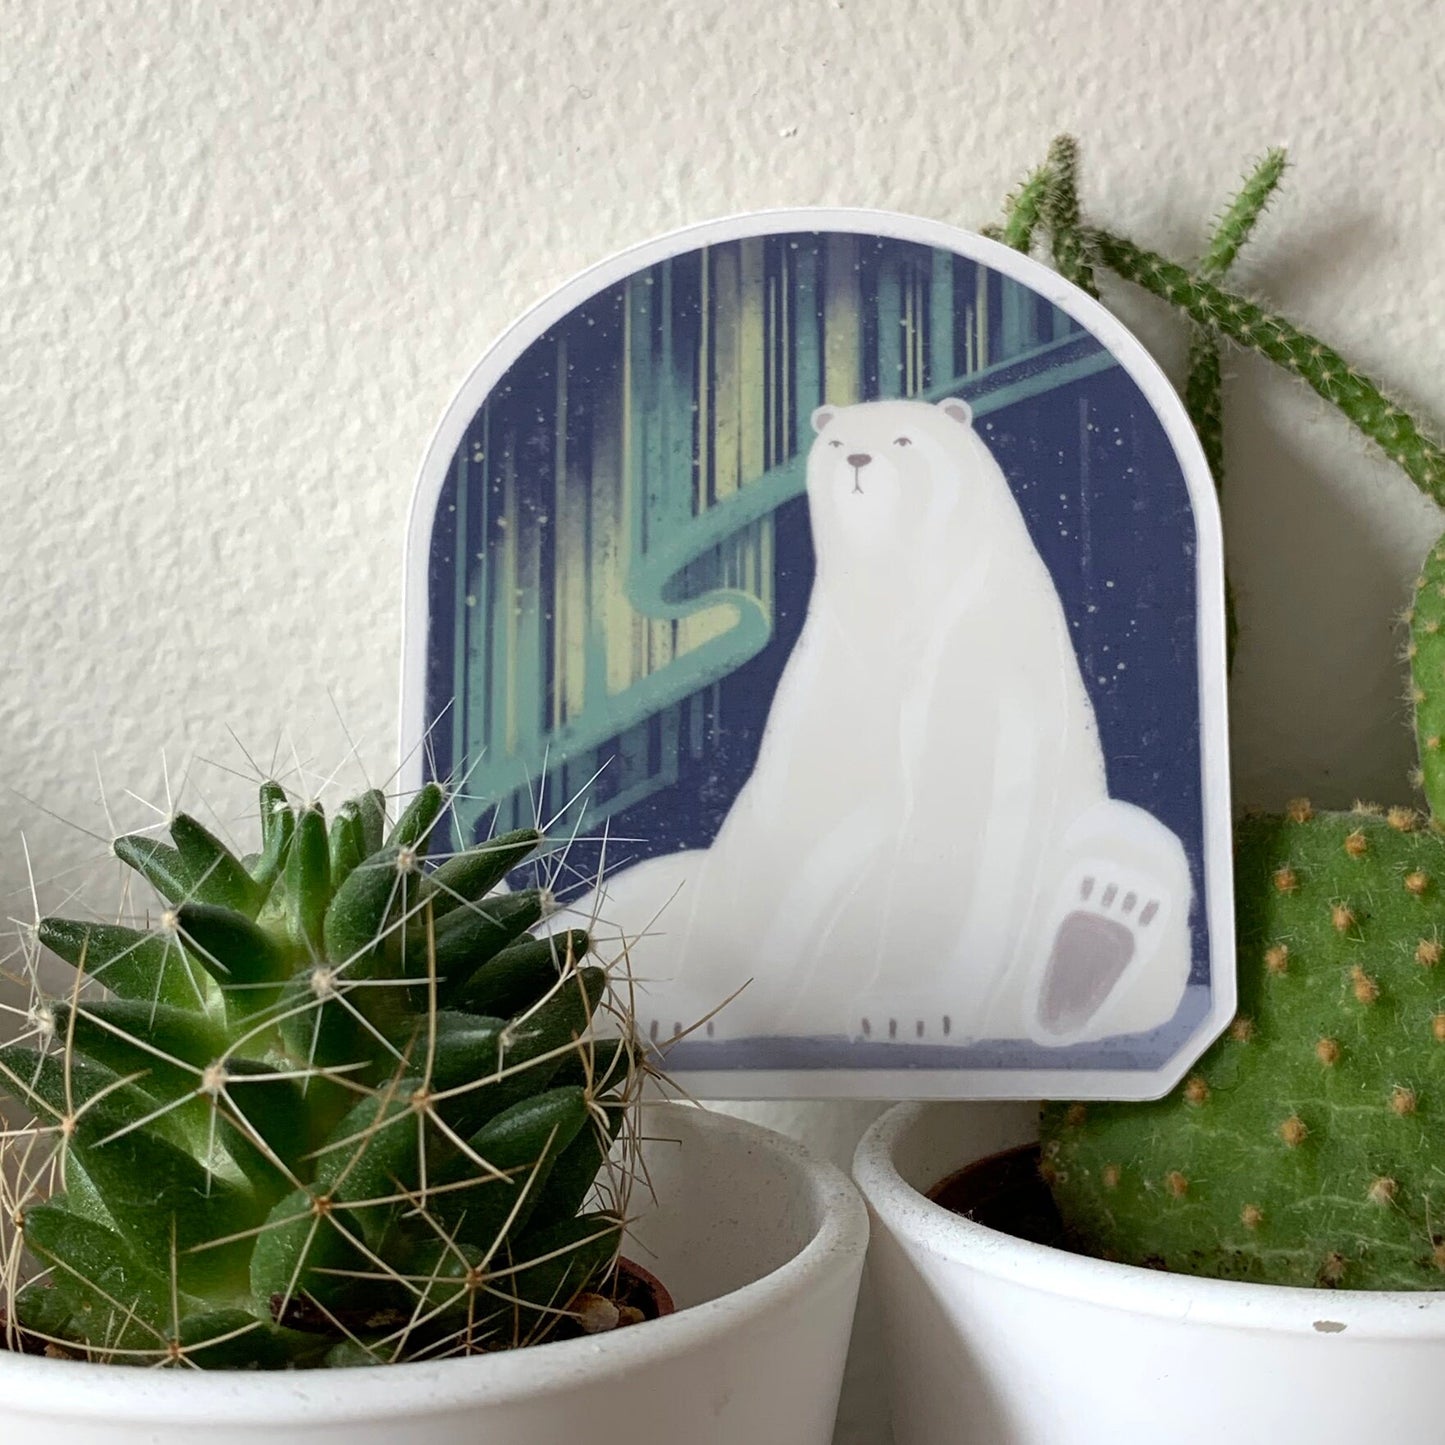 Polar Bear Sticker 02